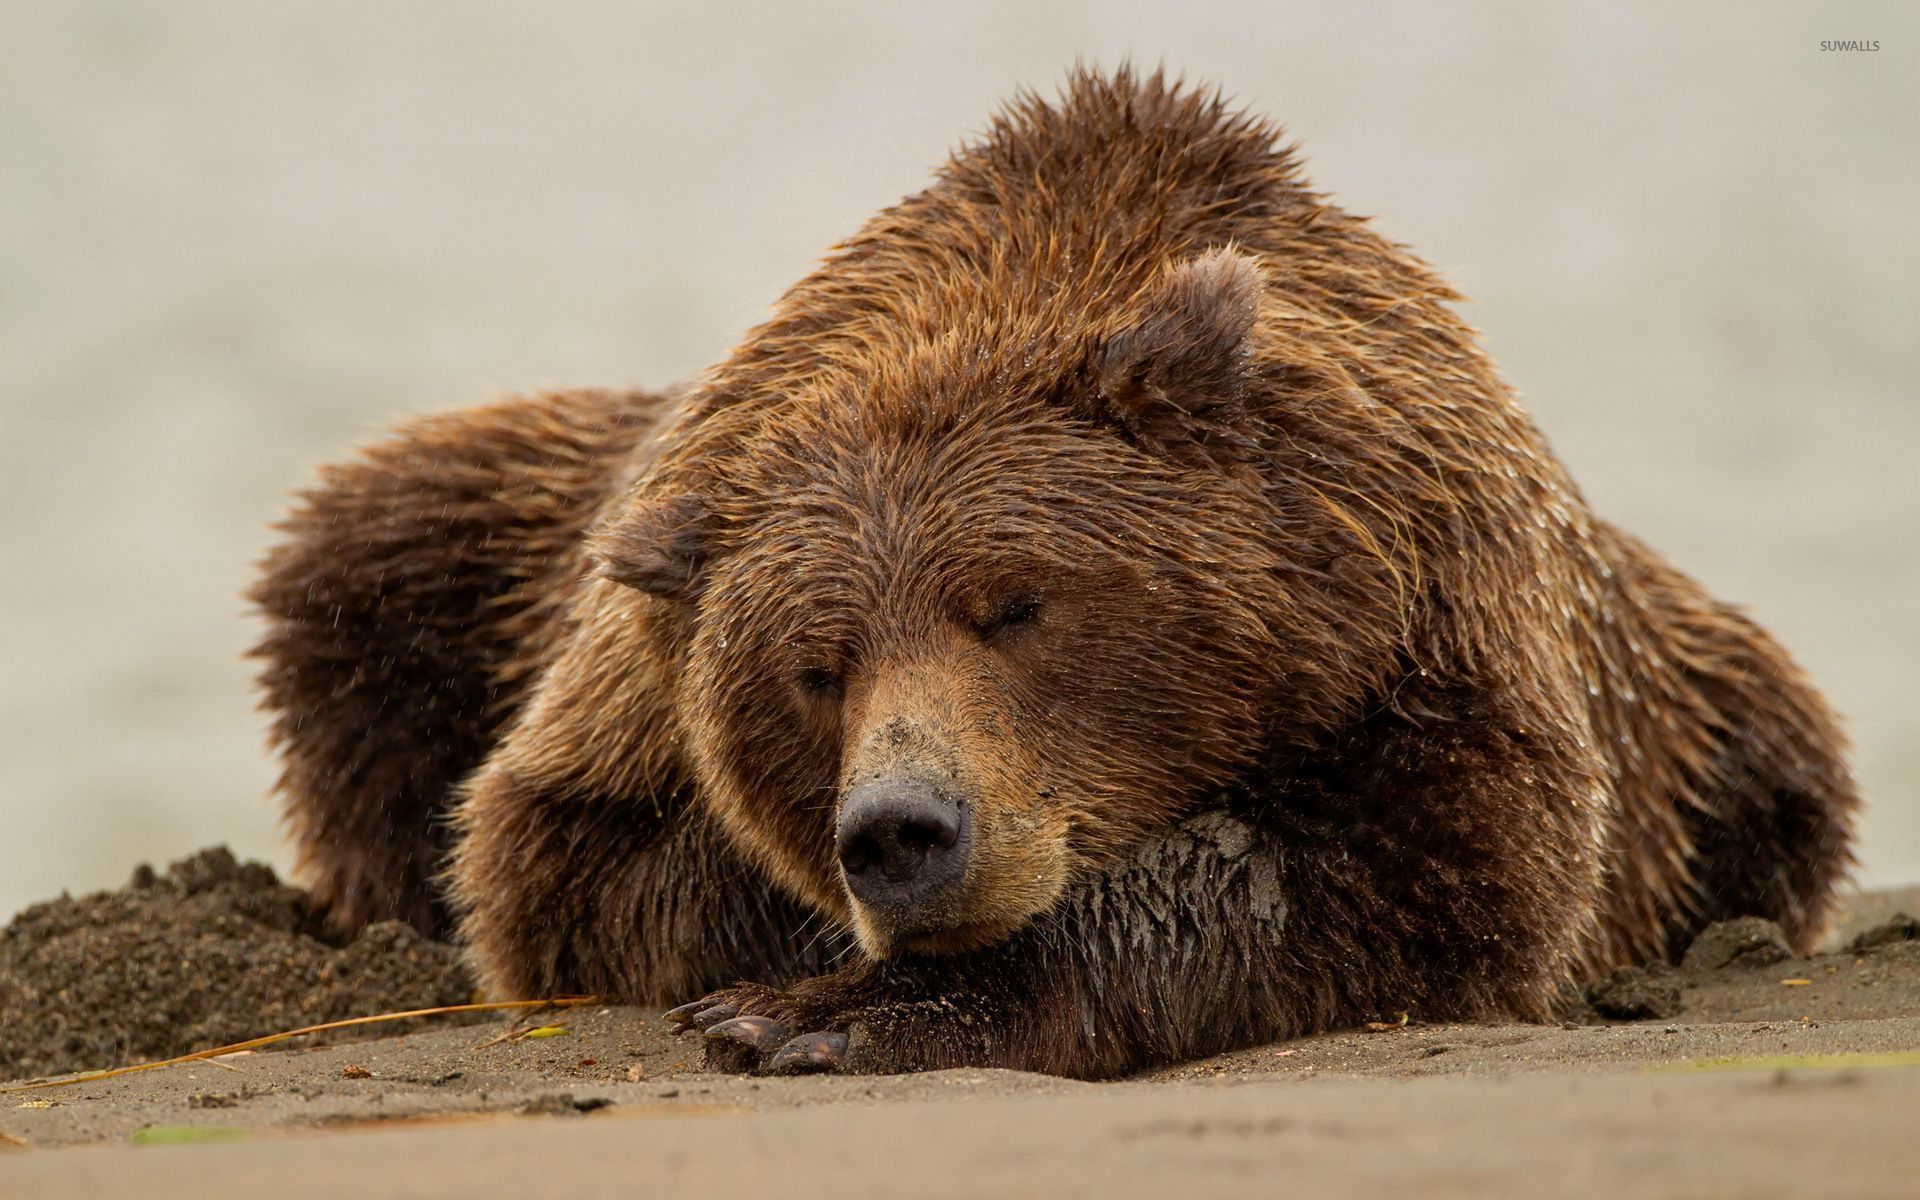 brown-bear-sleeping-on-wet-sand-52772-1920x1200.jpg